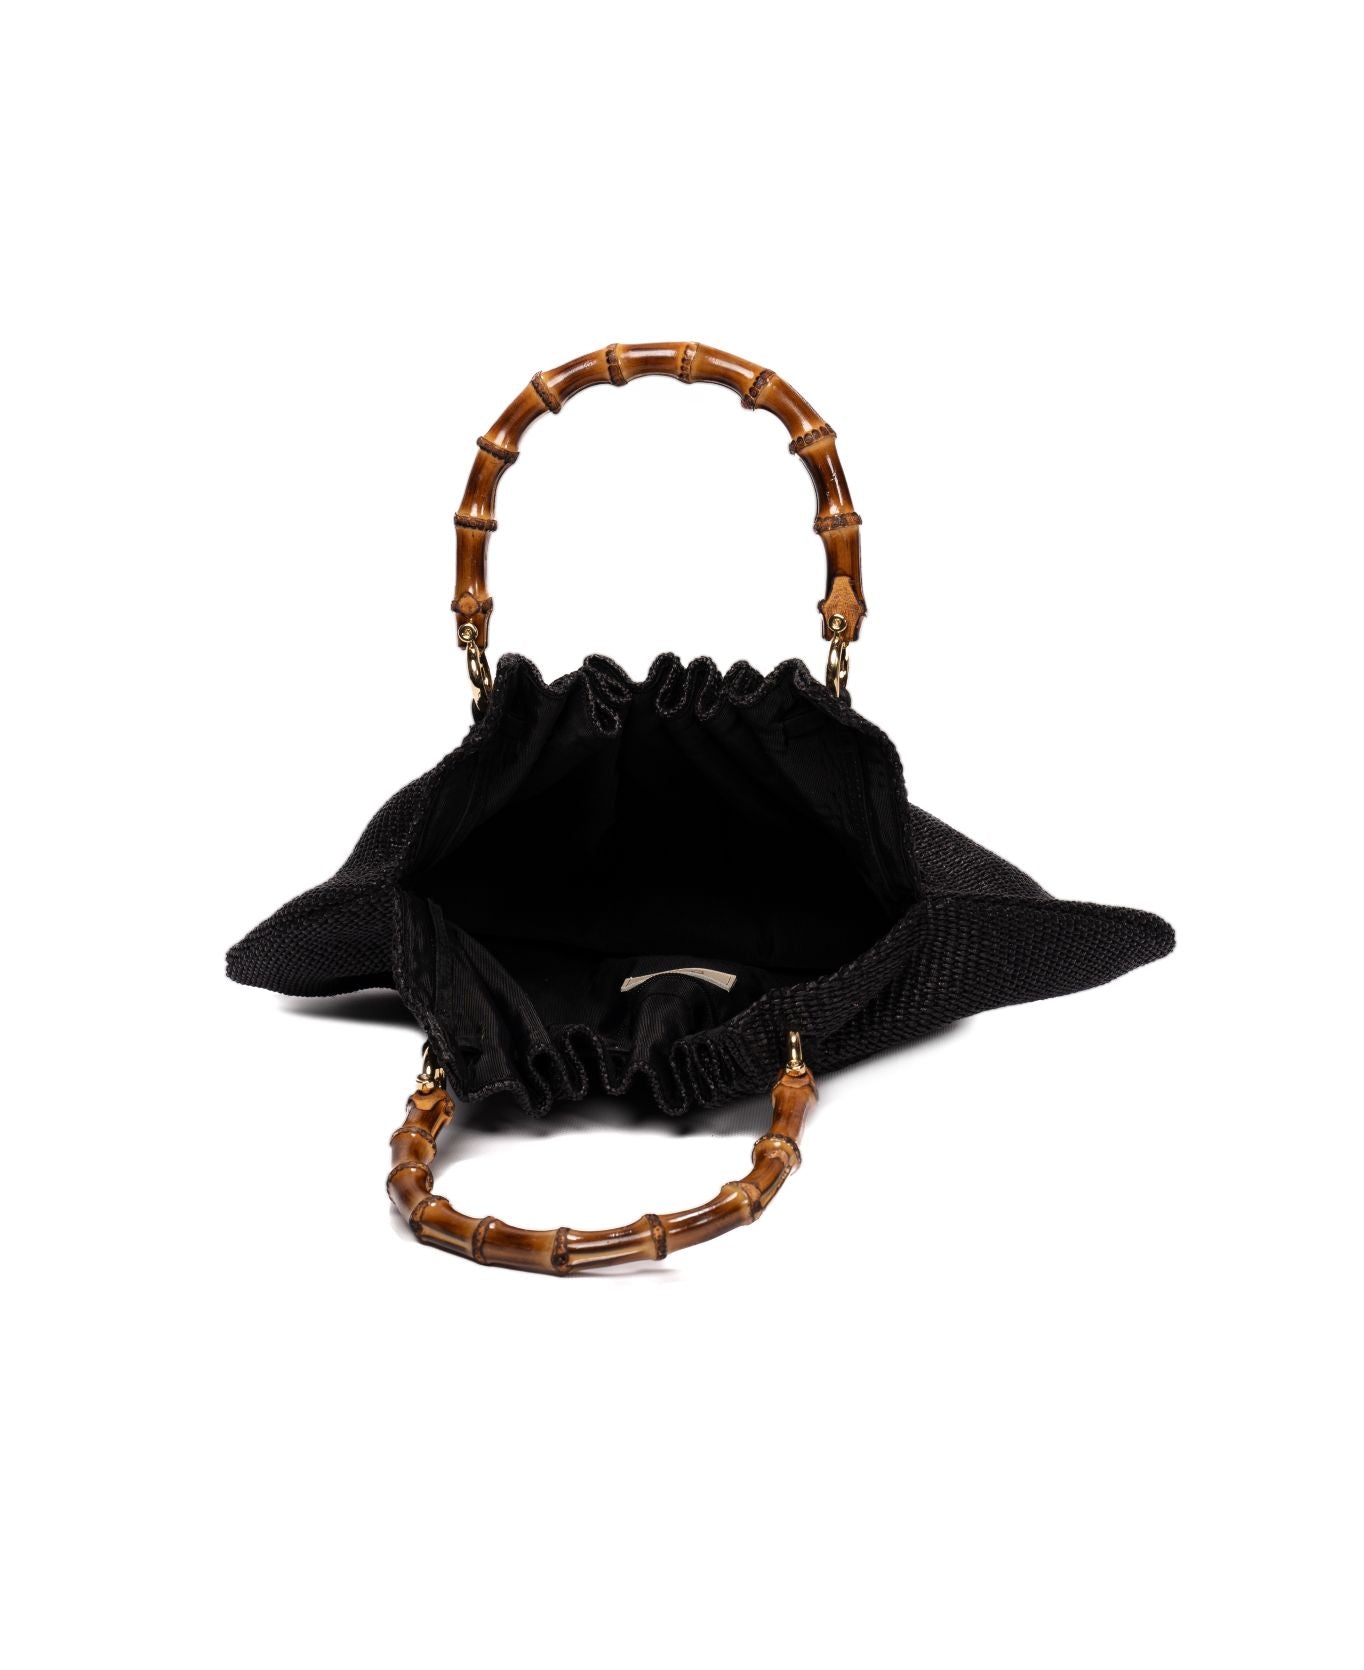 black raffia bamboo bag, circular bamboo handles handbag, slouchy raffia bag, medium size handbag, Italian craftsmanship handbag, versatile daily accessory, edgy black raffia bag, tabacco brown handbag option